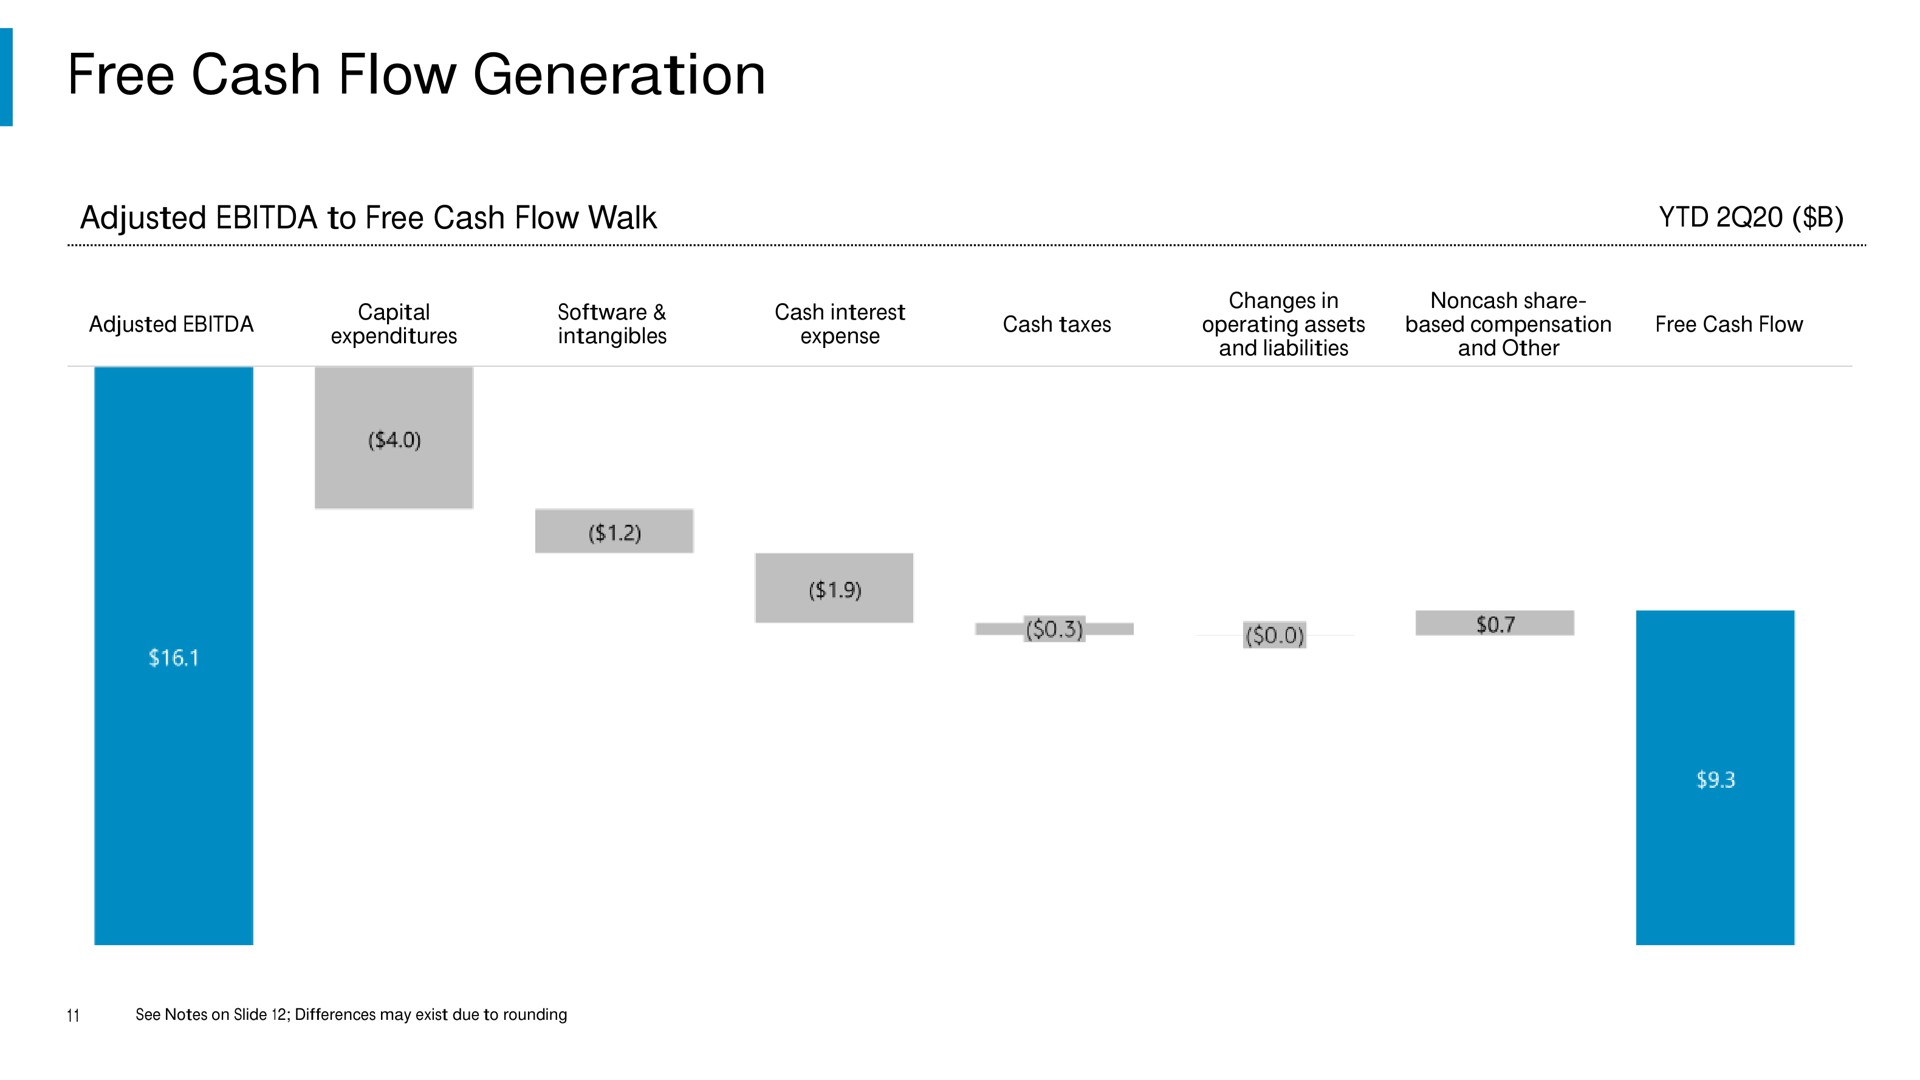 free cash flow generation adjusted to walk | Comcast